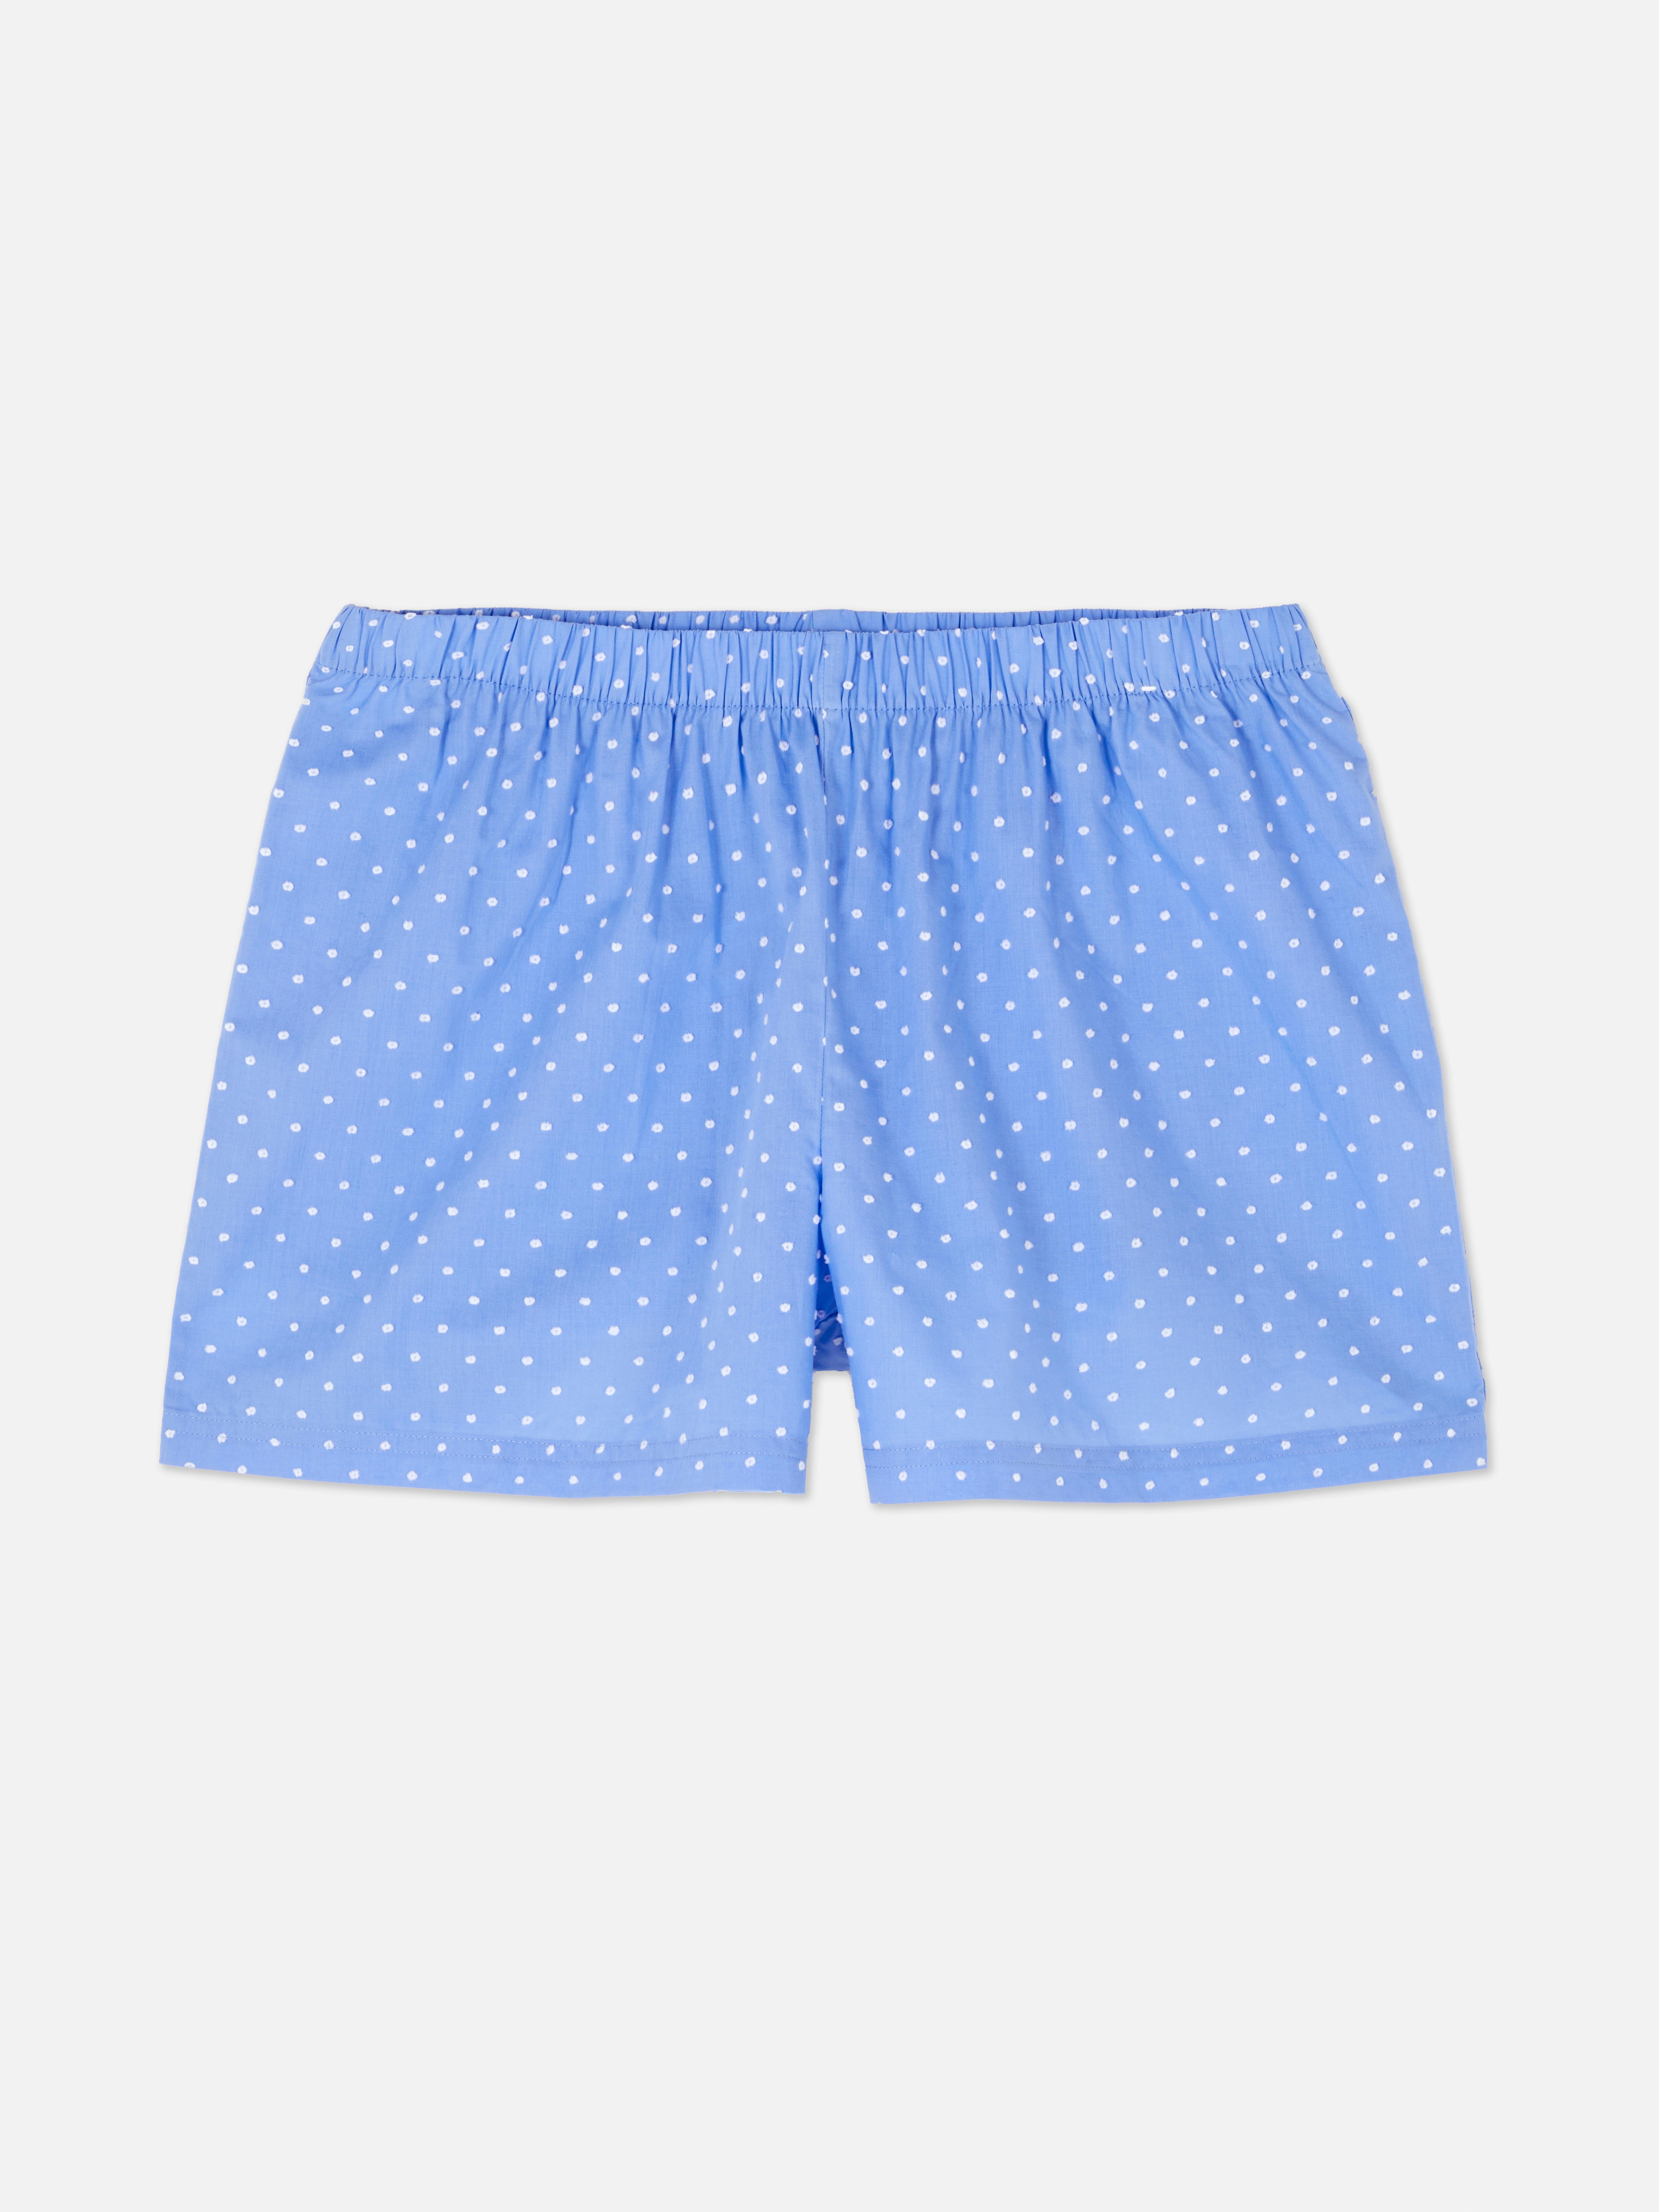 Primark pajama shorts